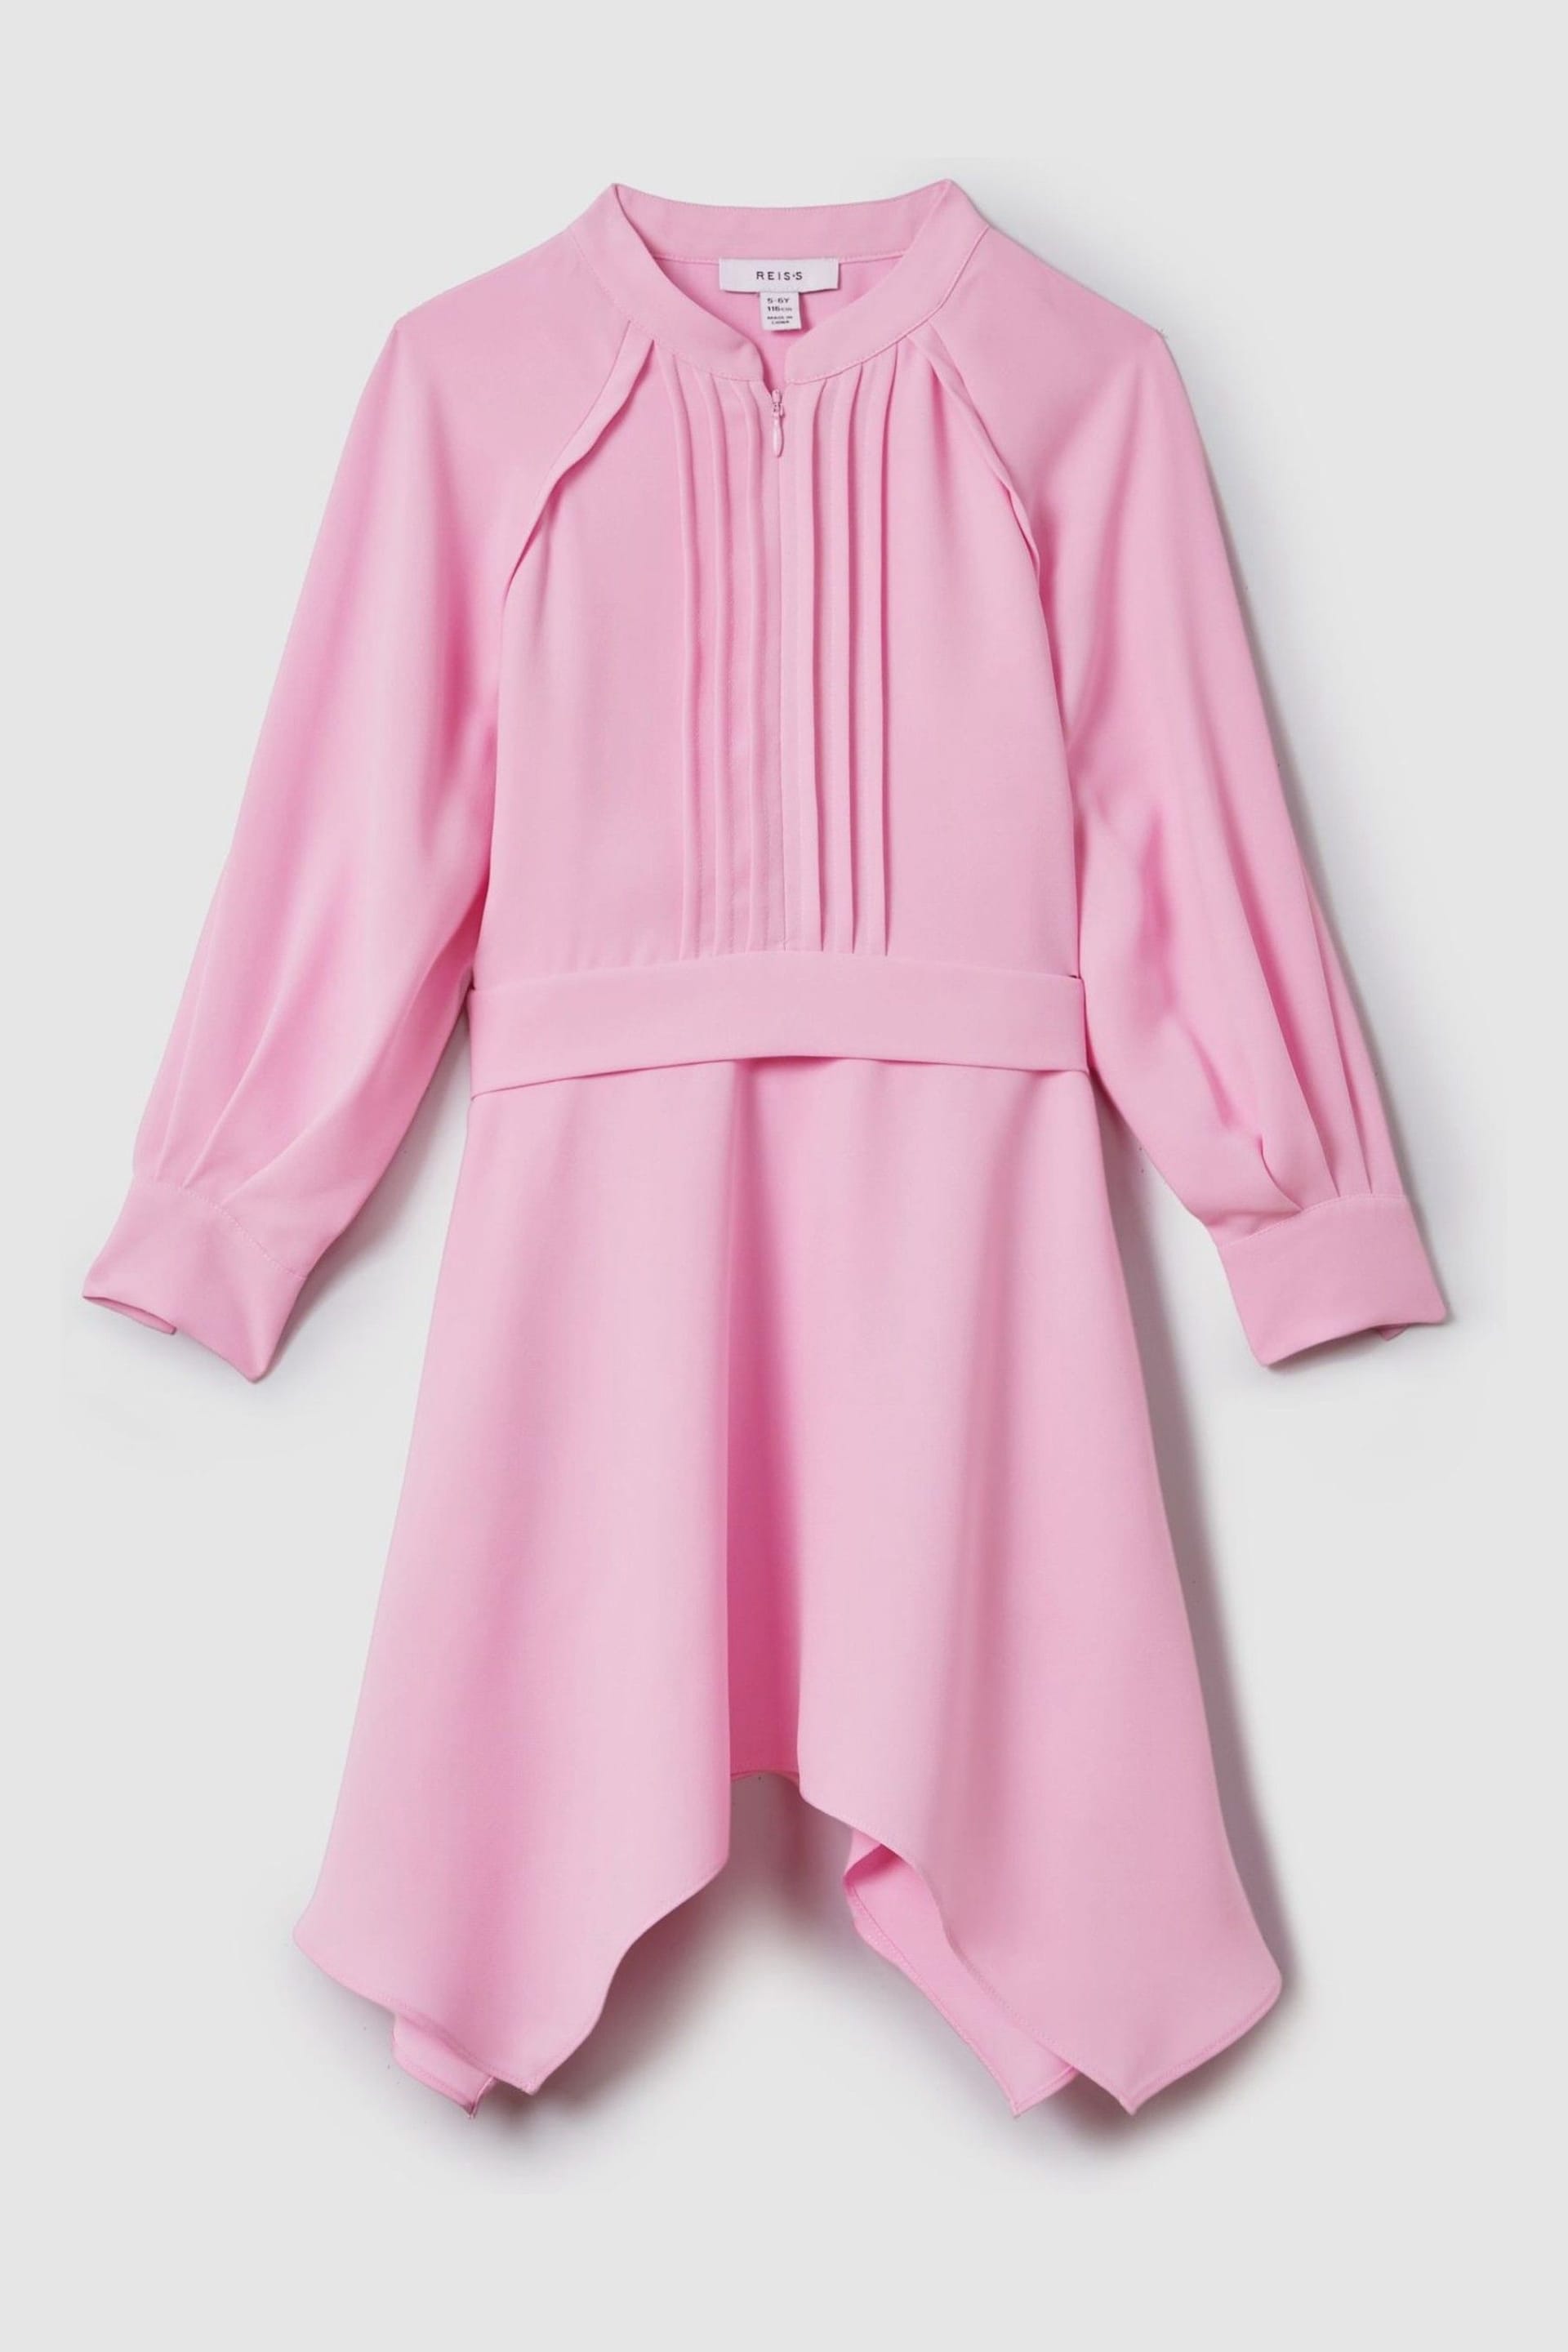 Reiss Pink Erica Senior Zip Front Asymmetric Dress - Image 2 of 6